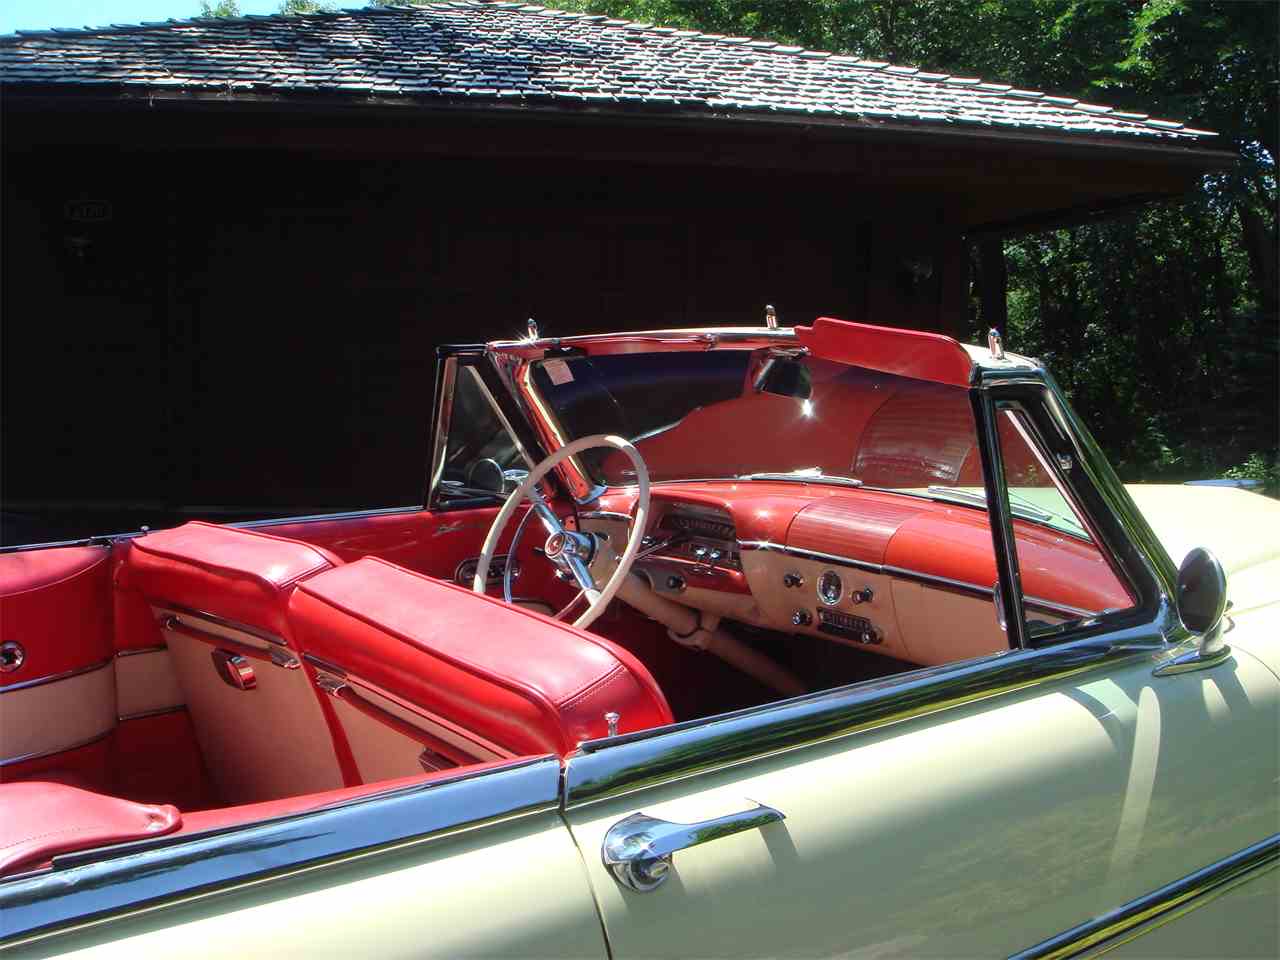 mercury, Muscled-up ’54 Merc convertible, ClassicCars.com Journal